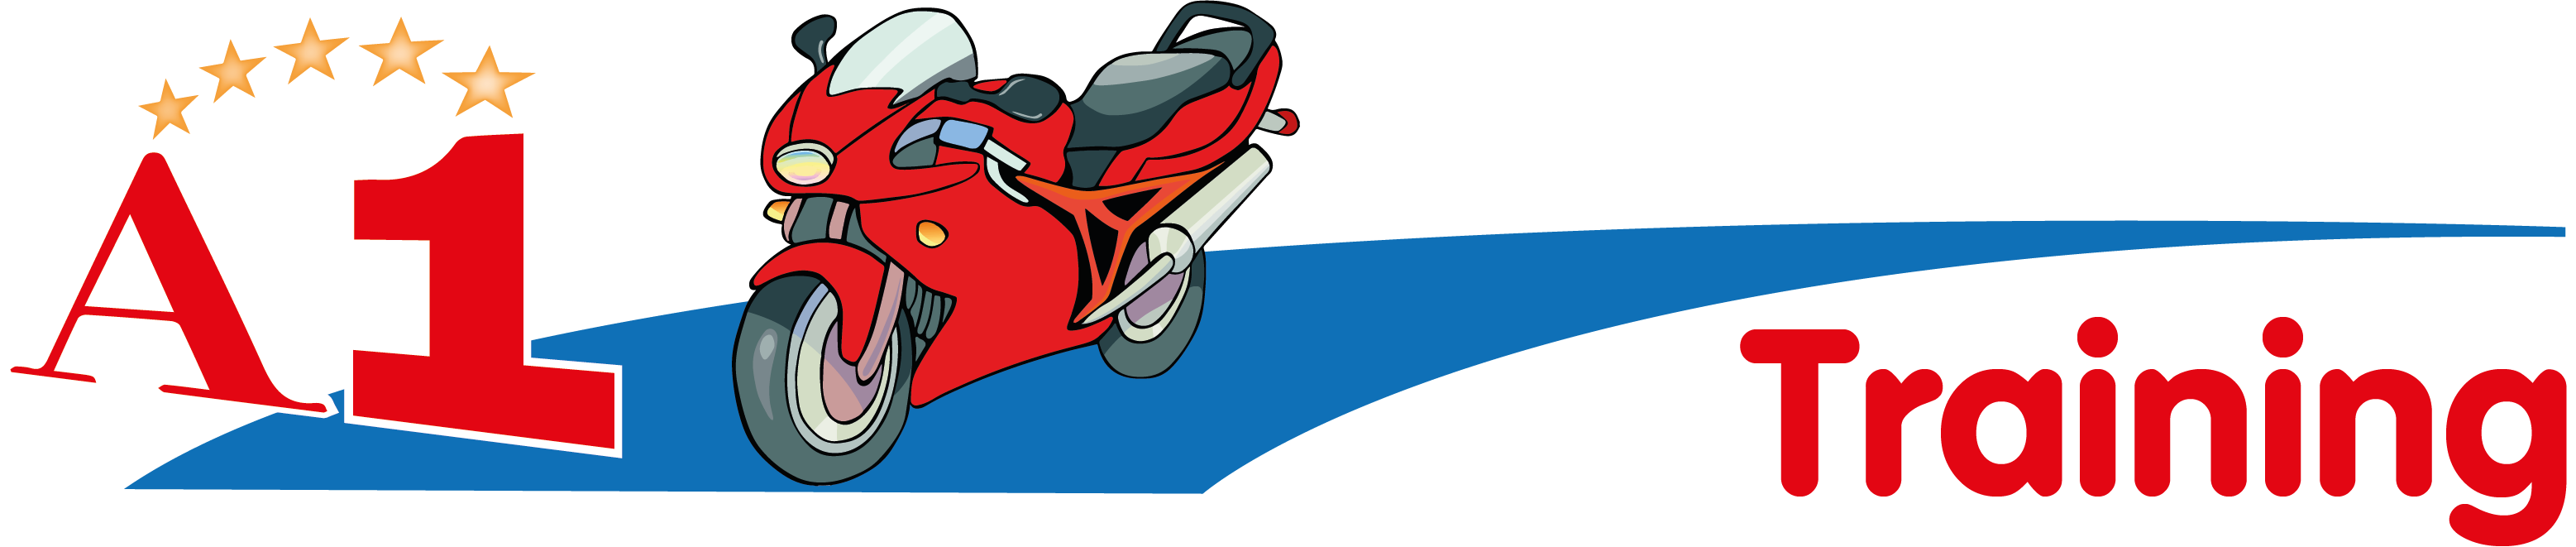 A1 Motorcycle Training logo